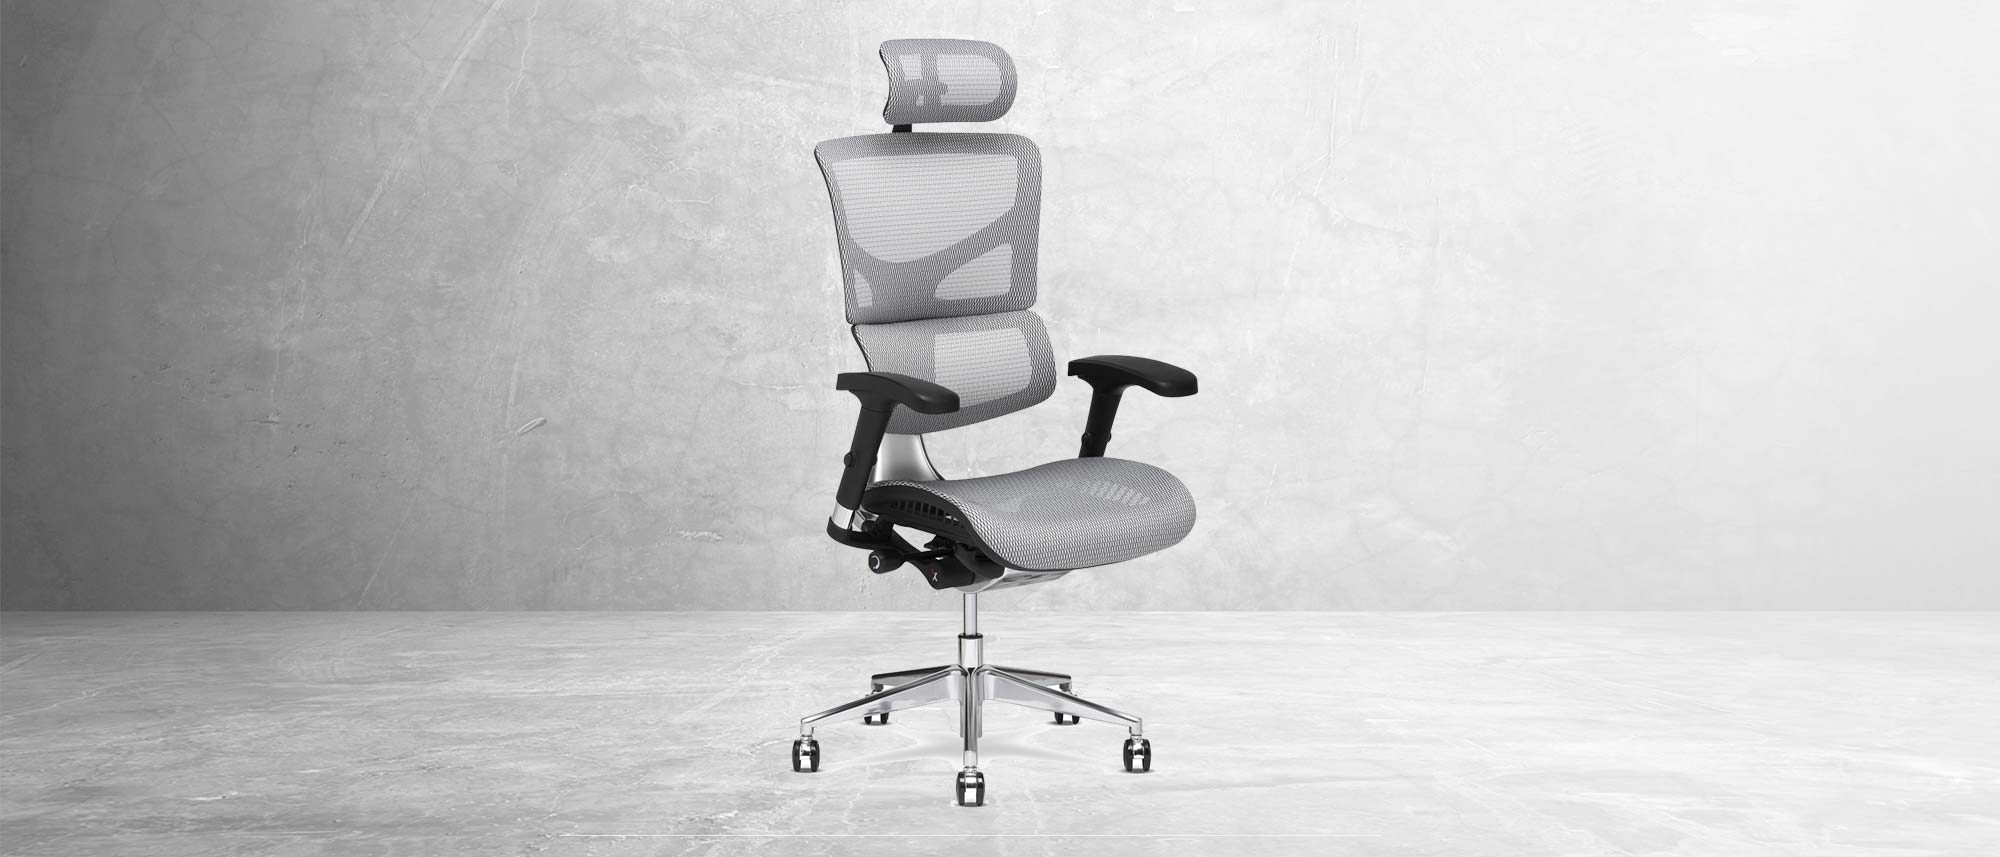 X-Chair X2 K-Sport Management chair review